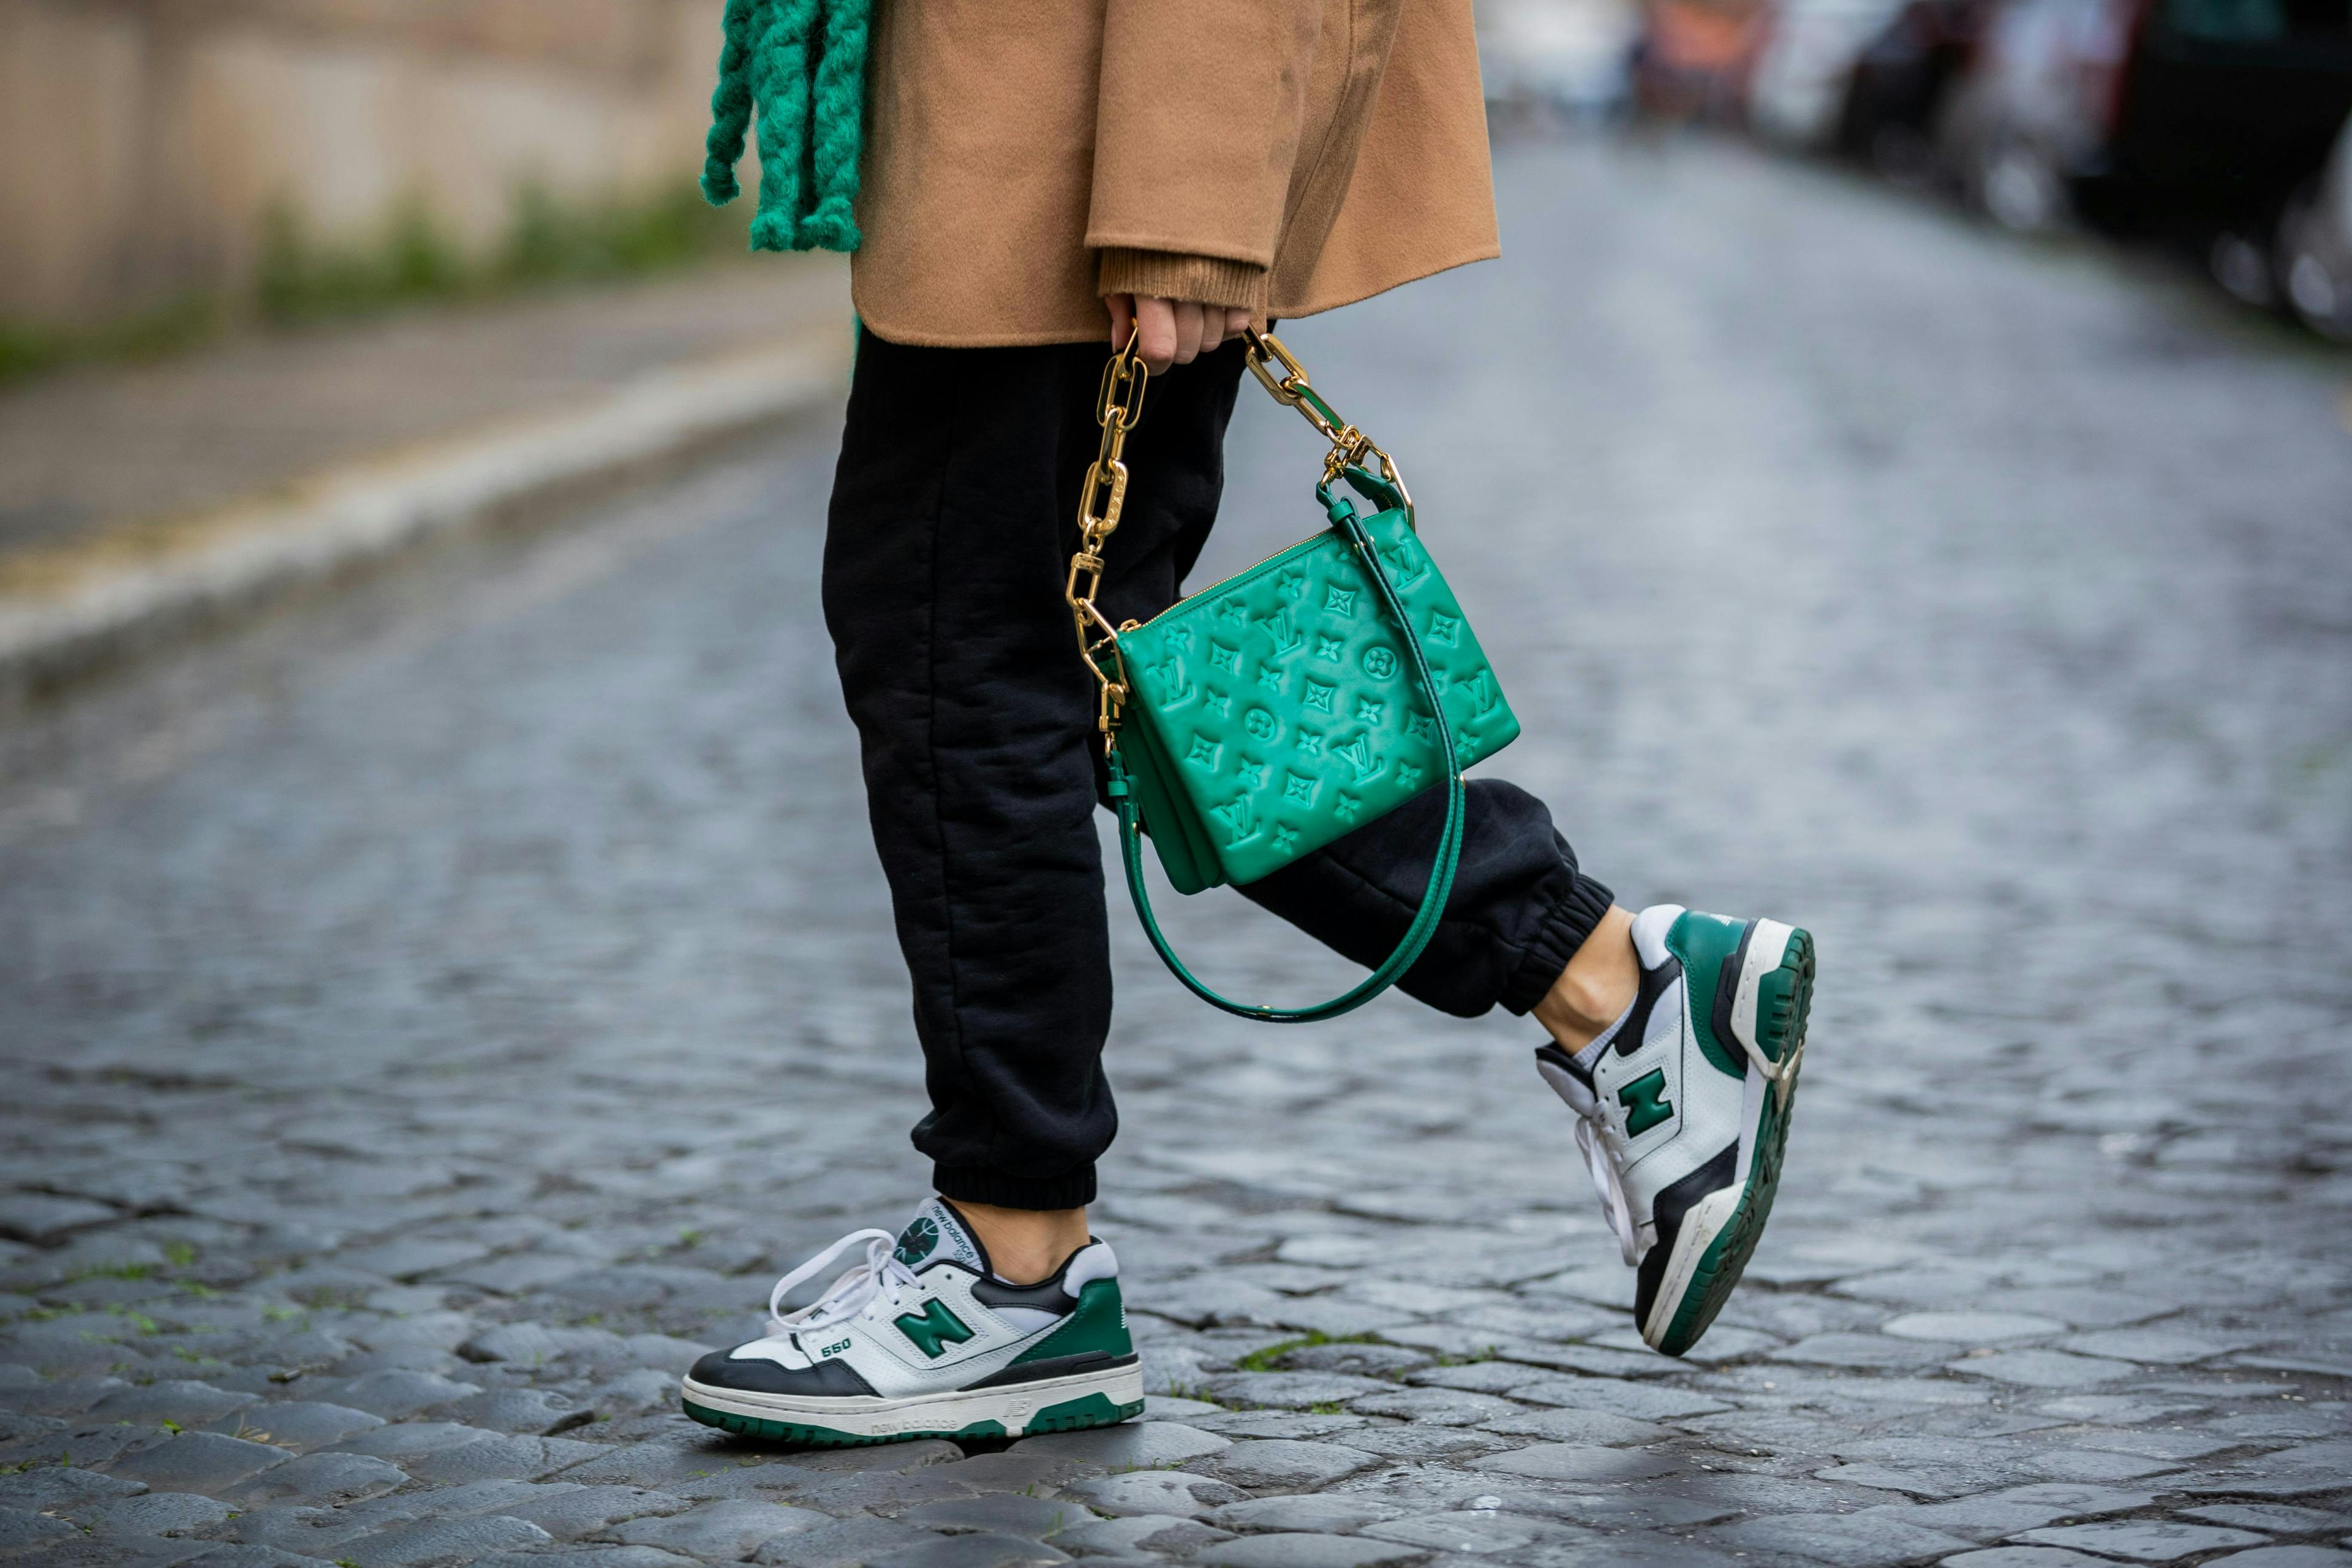 rome clothing apparel shoe footwear person human handbag bag accessories accessory